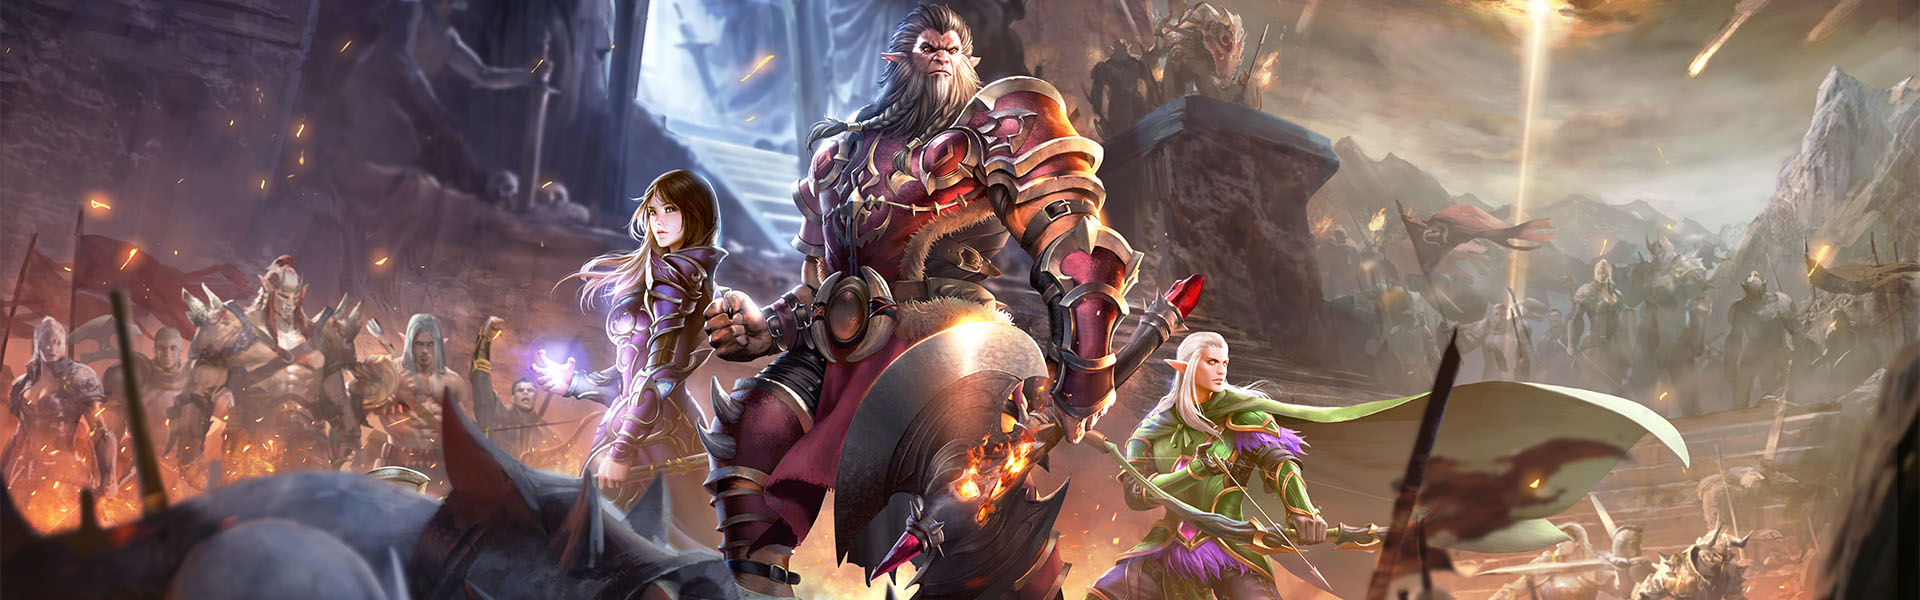 NetEase Games Debuts Crusaders of Light 13